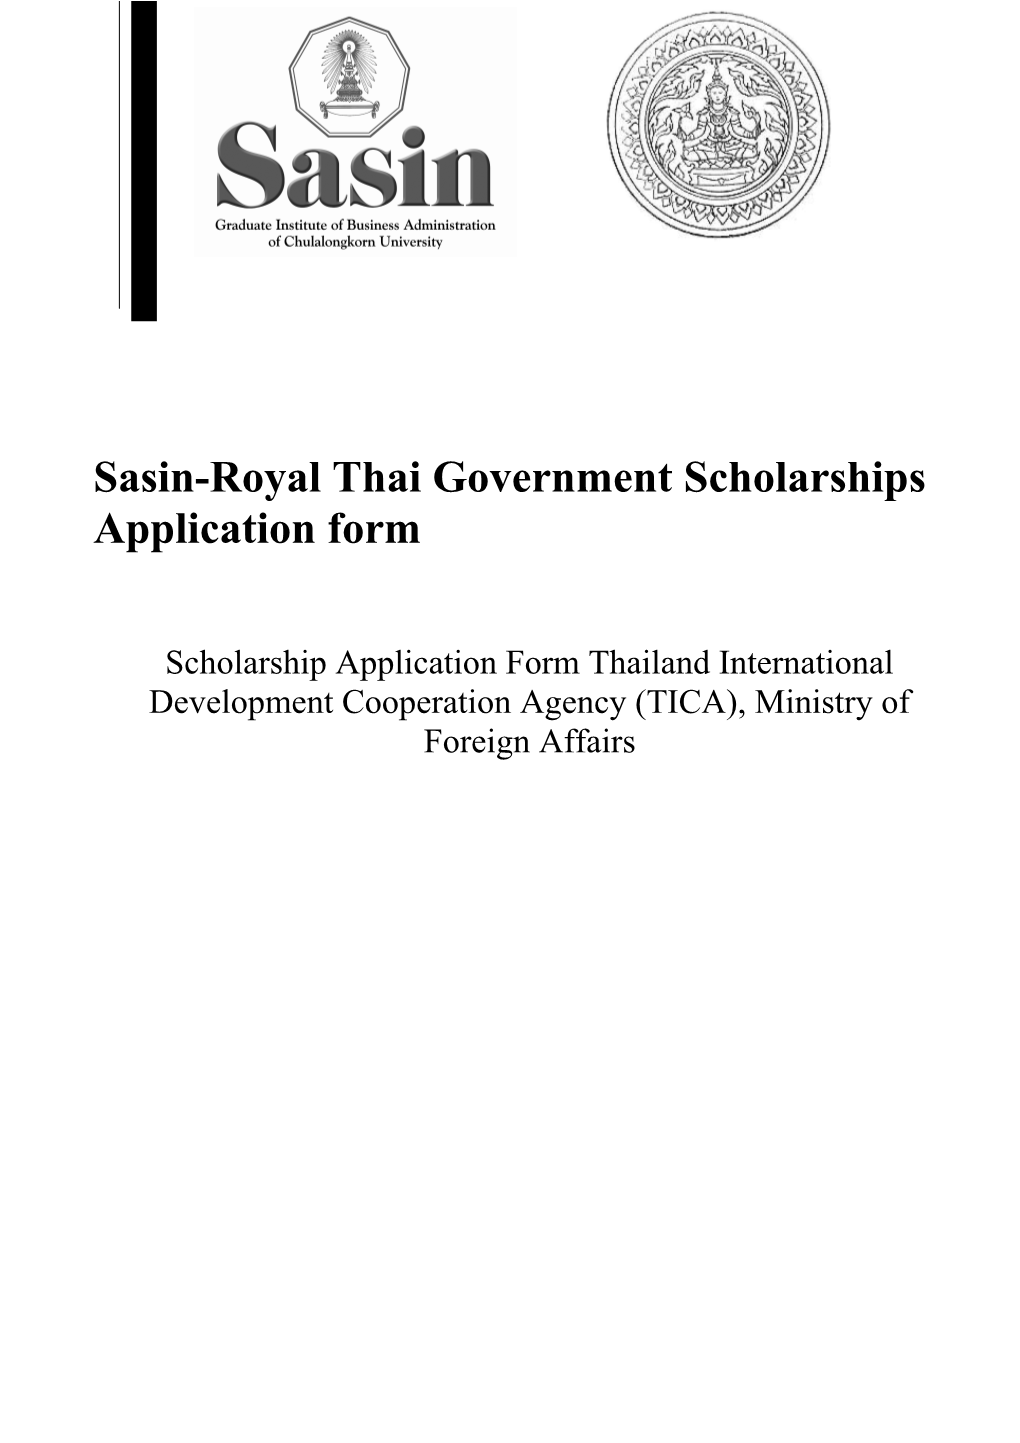 Sasin-Royal Thai Government Scholarships Application Form